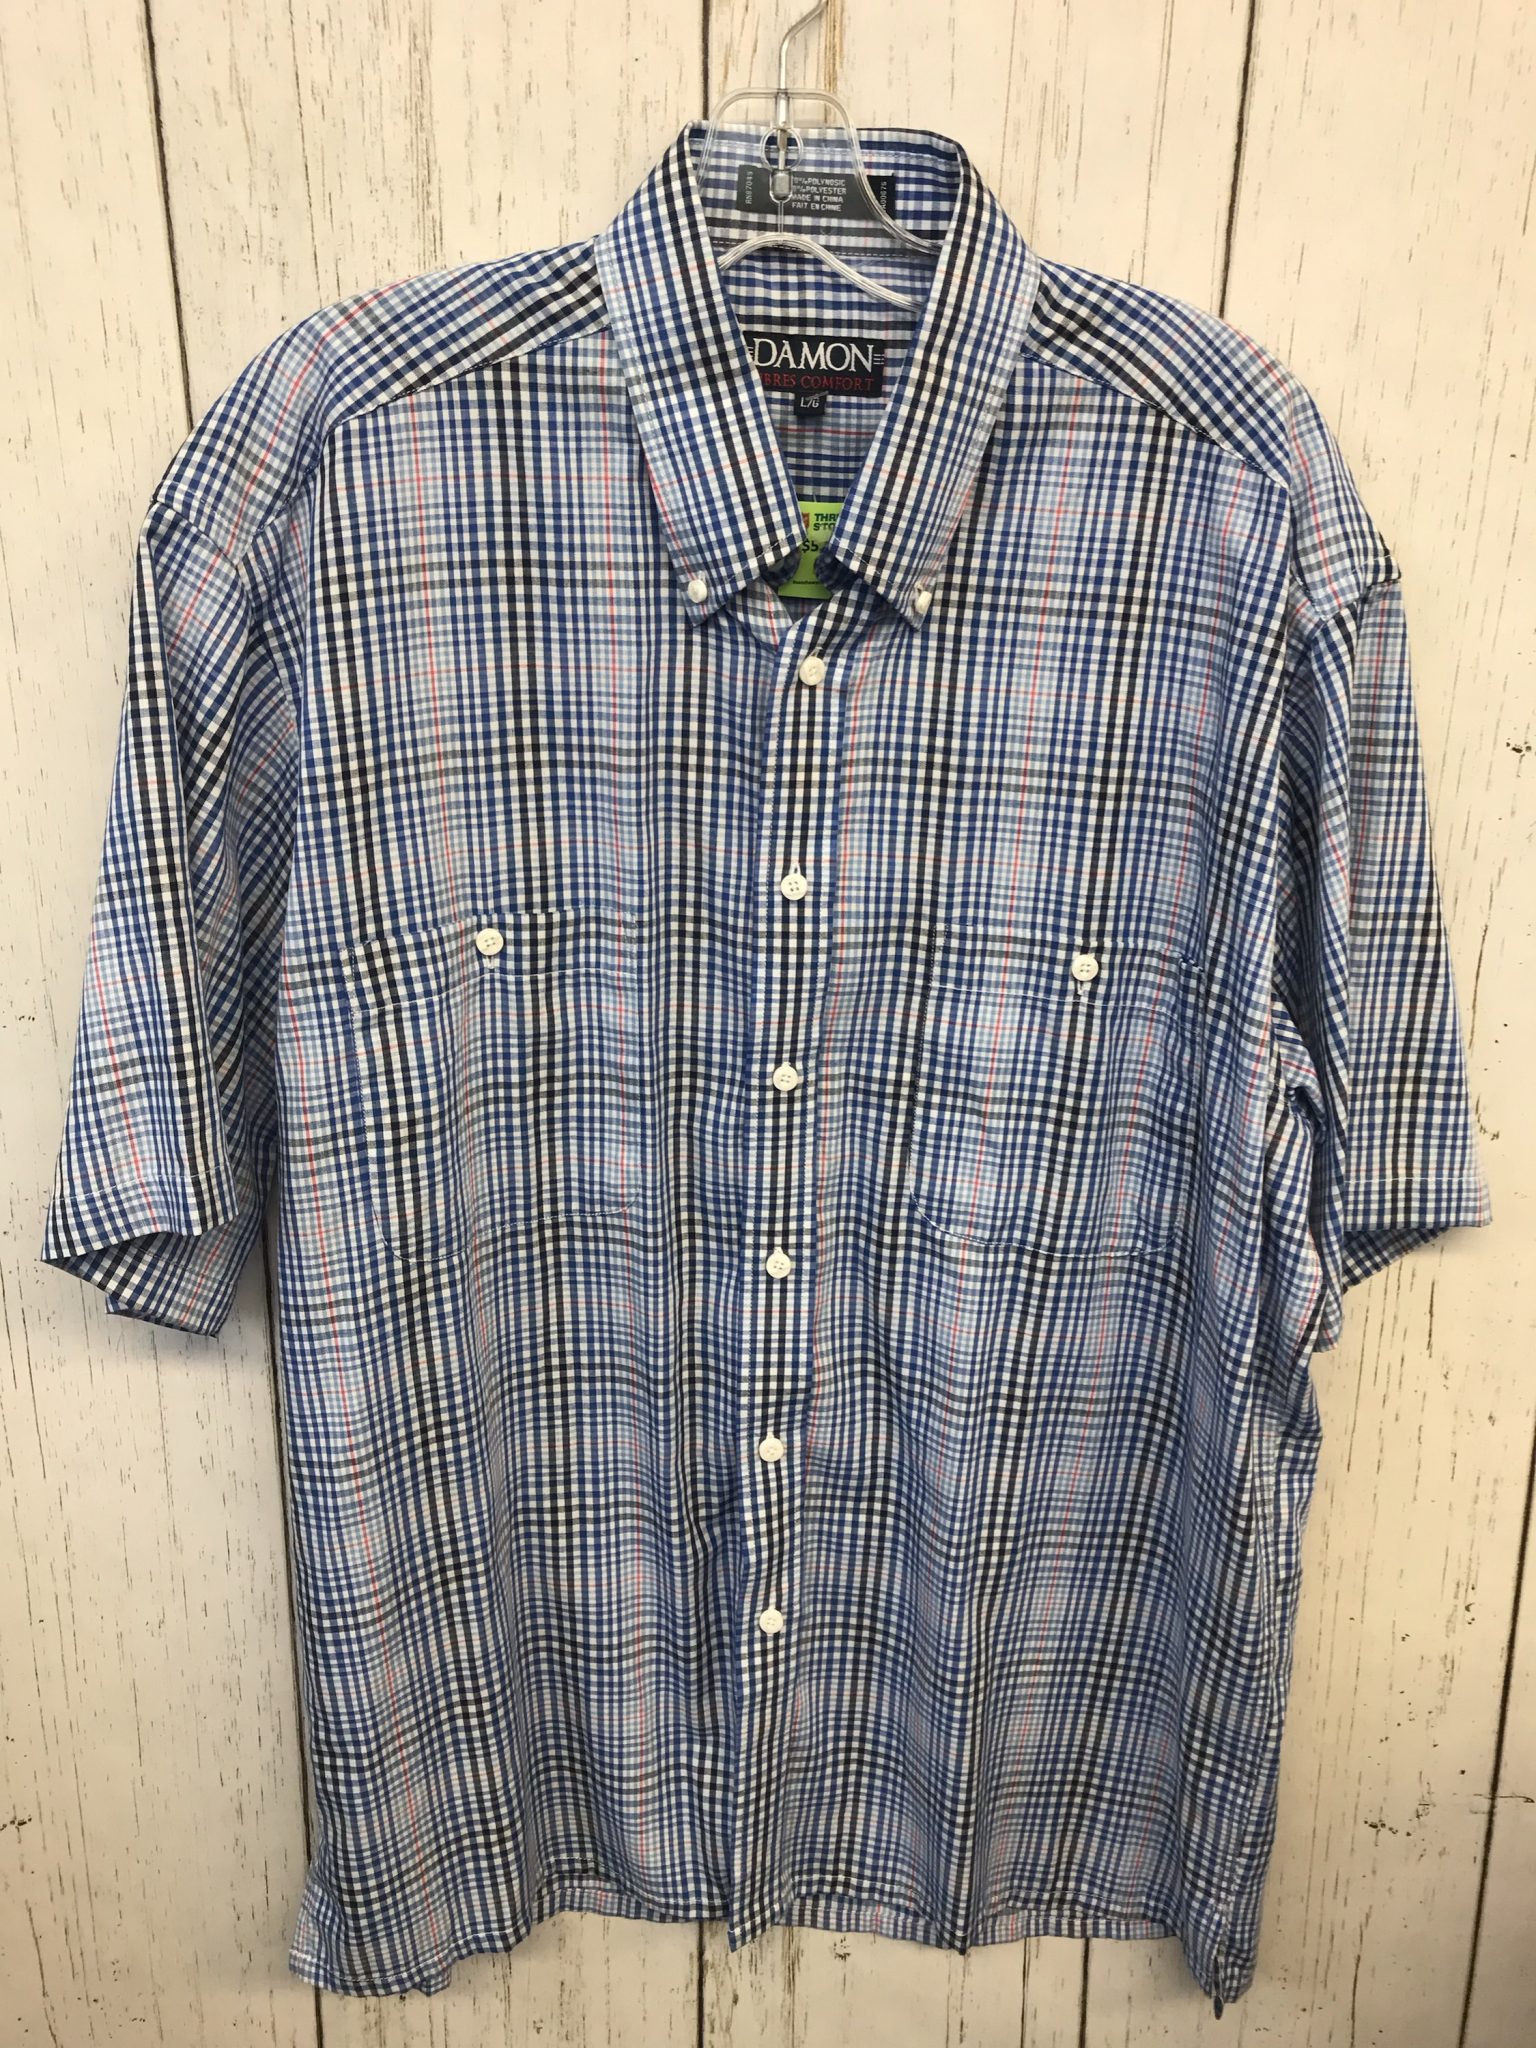 Mens short sleeve plaid shirt by DAMON-Size: Large